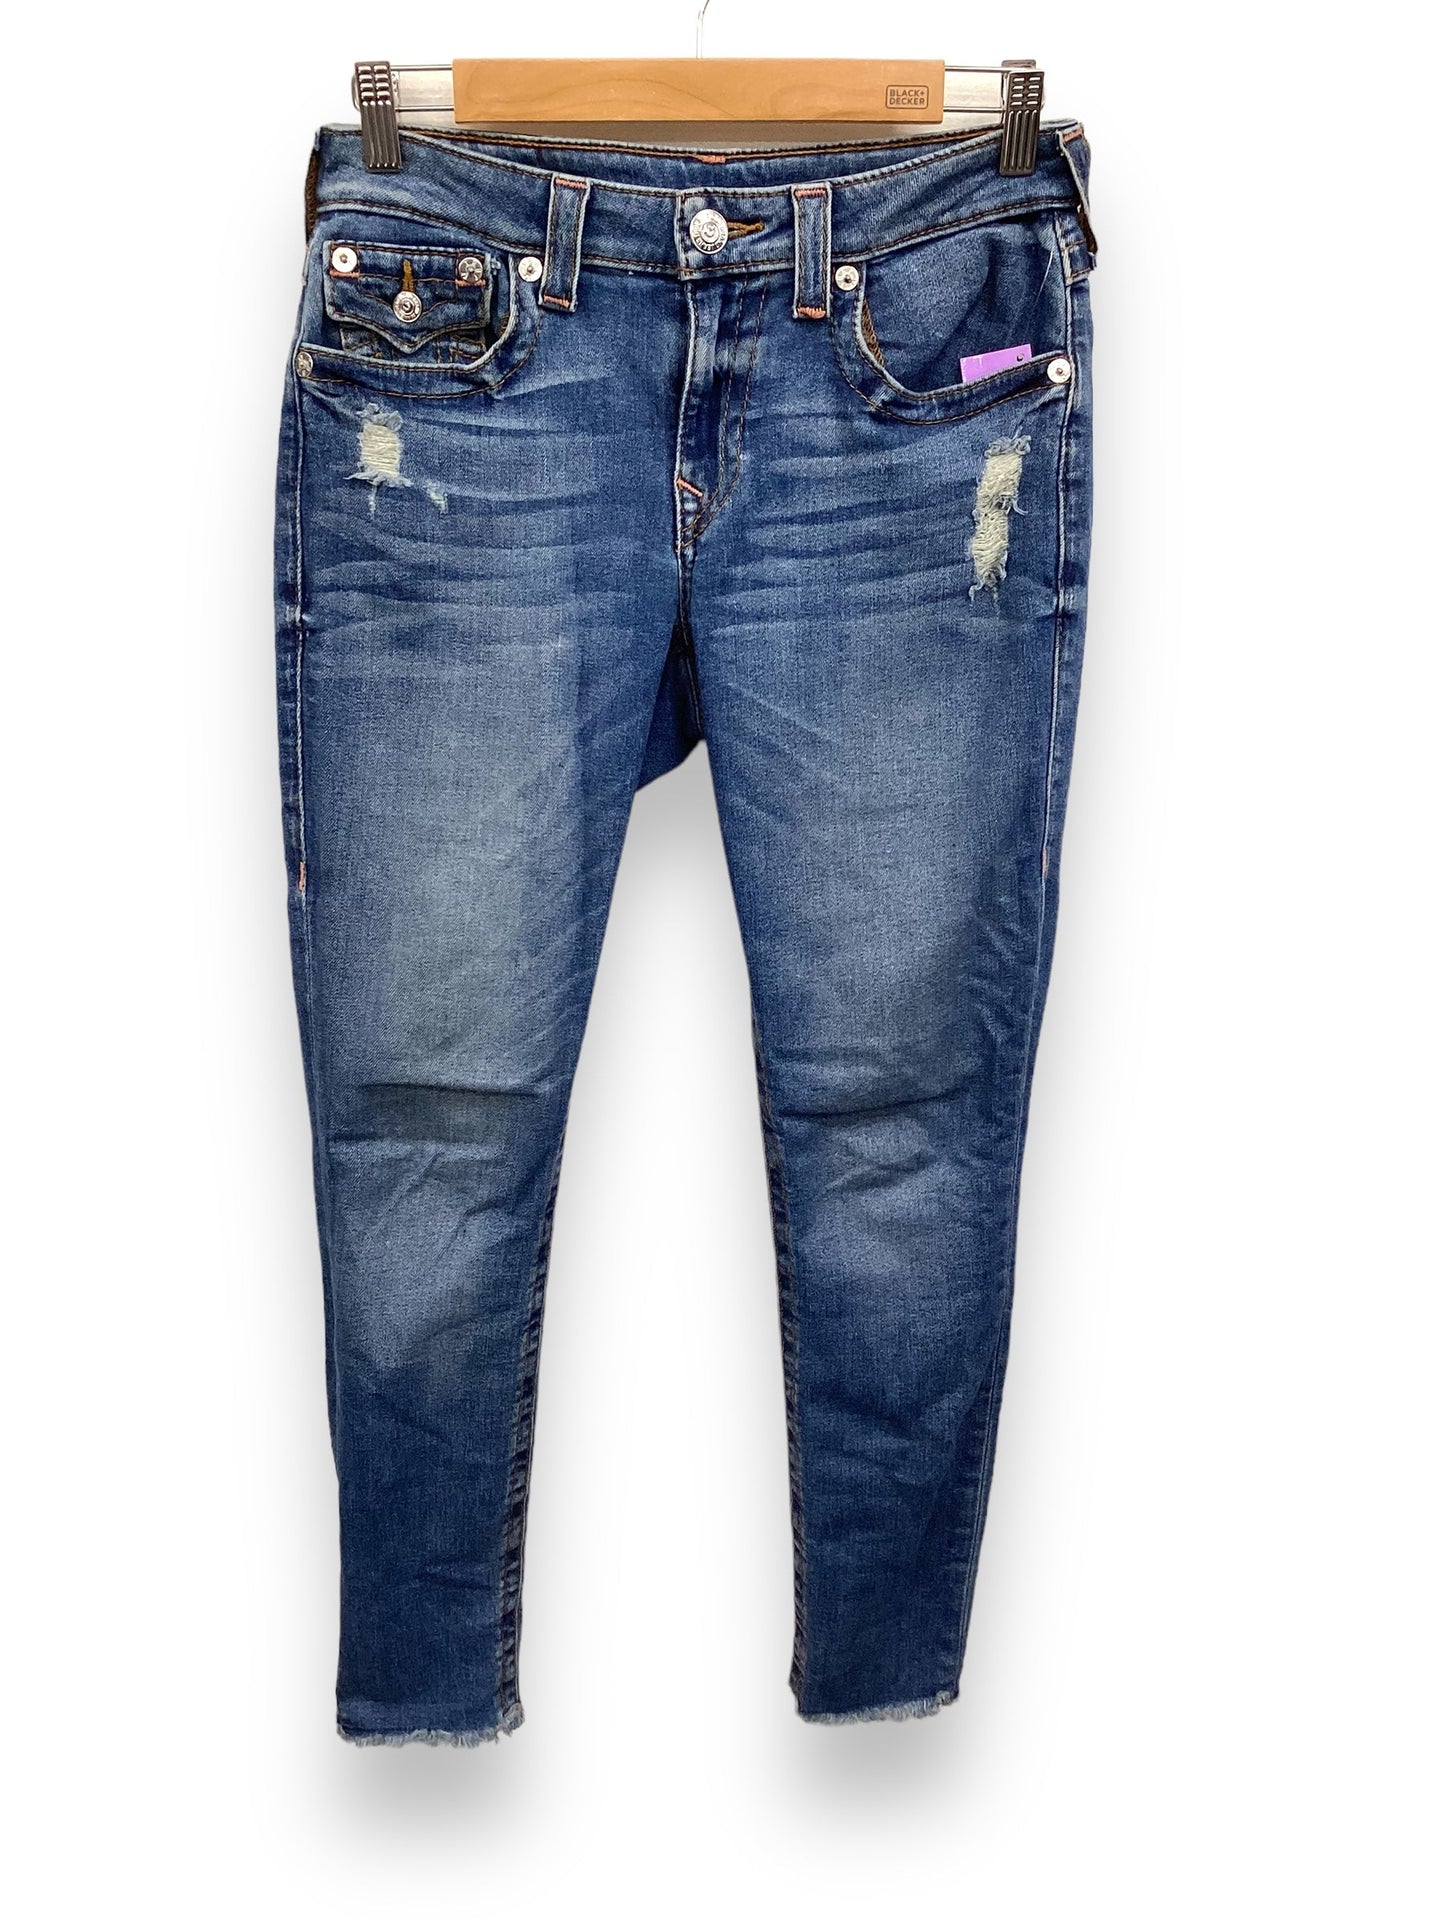 Blue Denim Jeans Designer True Religion, Size 4